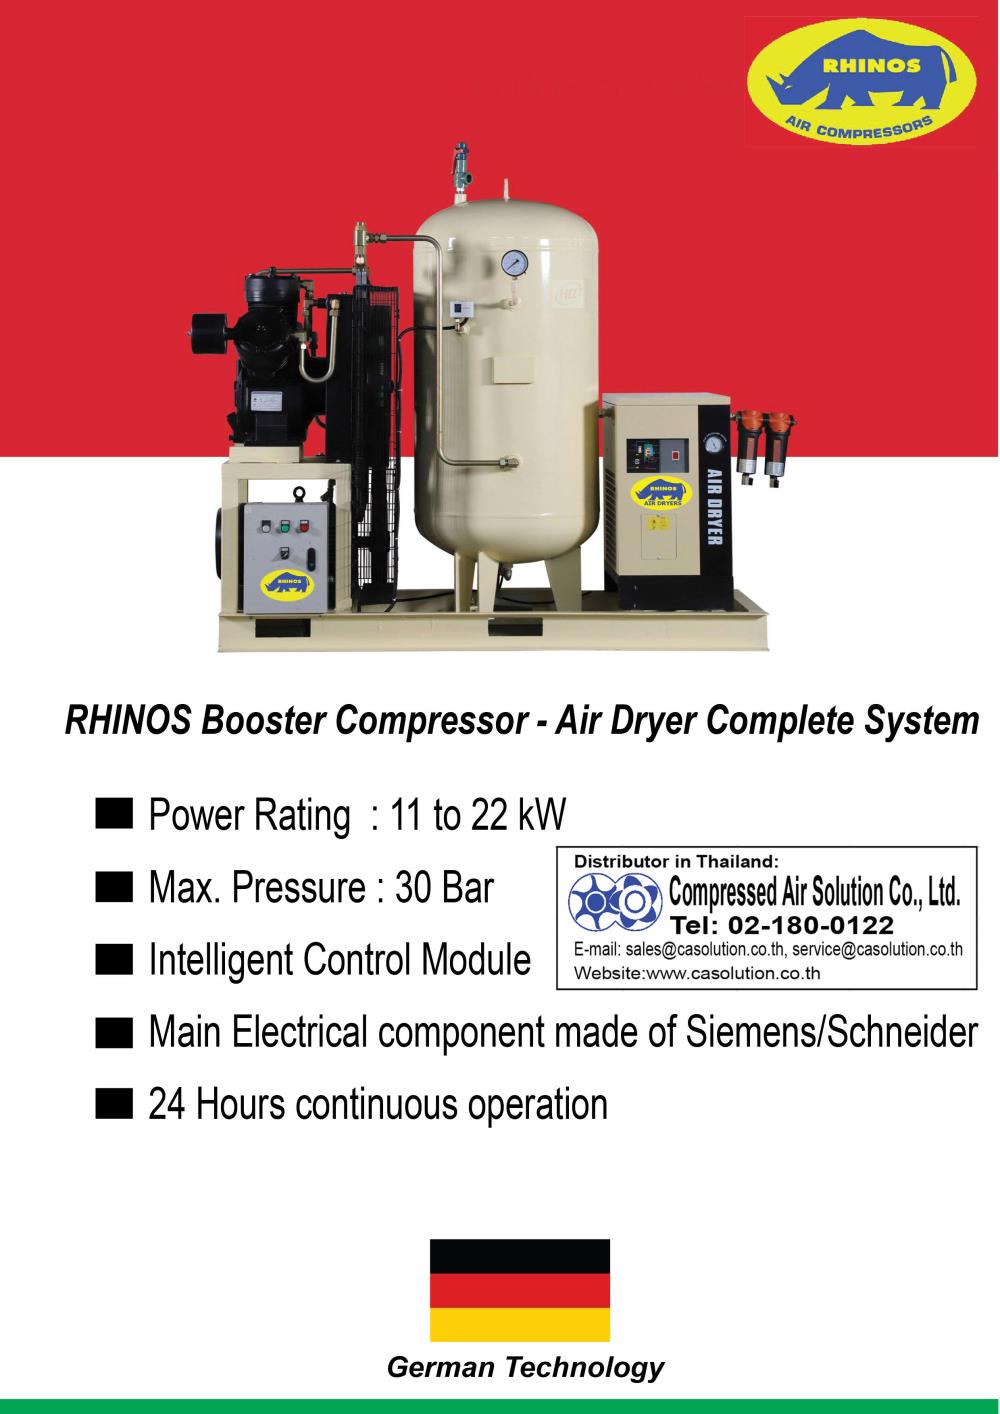 RHINOS Booster+Air Dryer ประสิทธิภาพสูง,booster compressor ,RHINOS,Machinery and Process Equipment/Compressors/Air Compressor